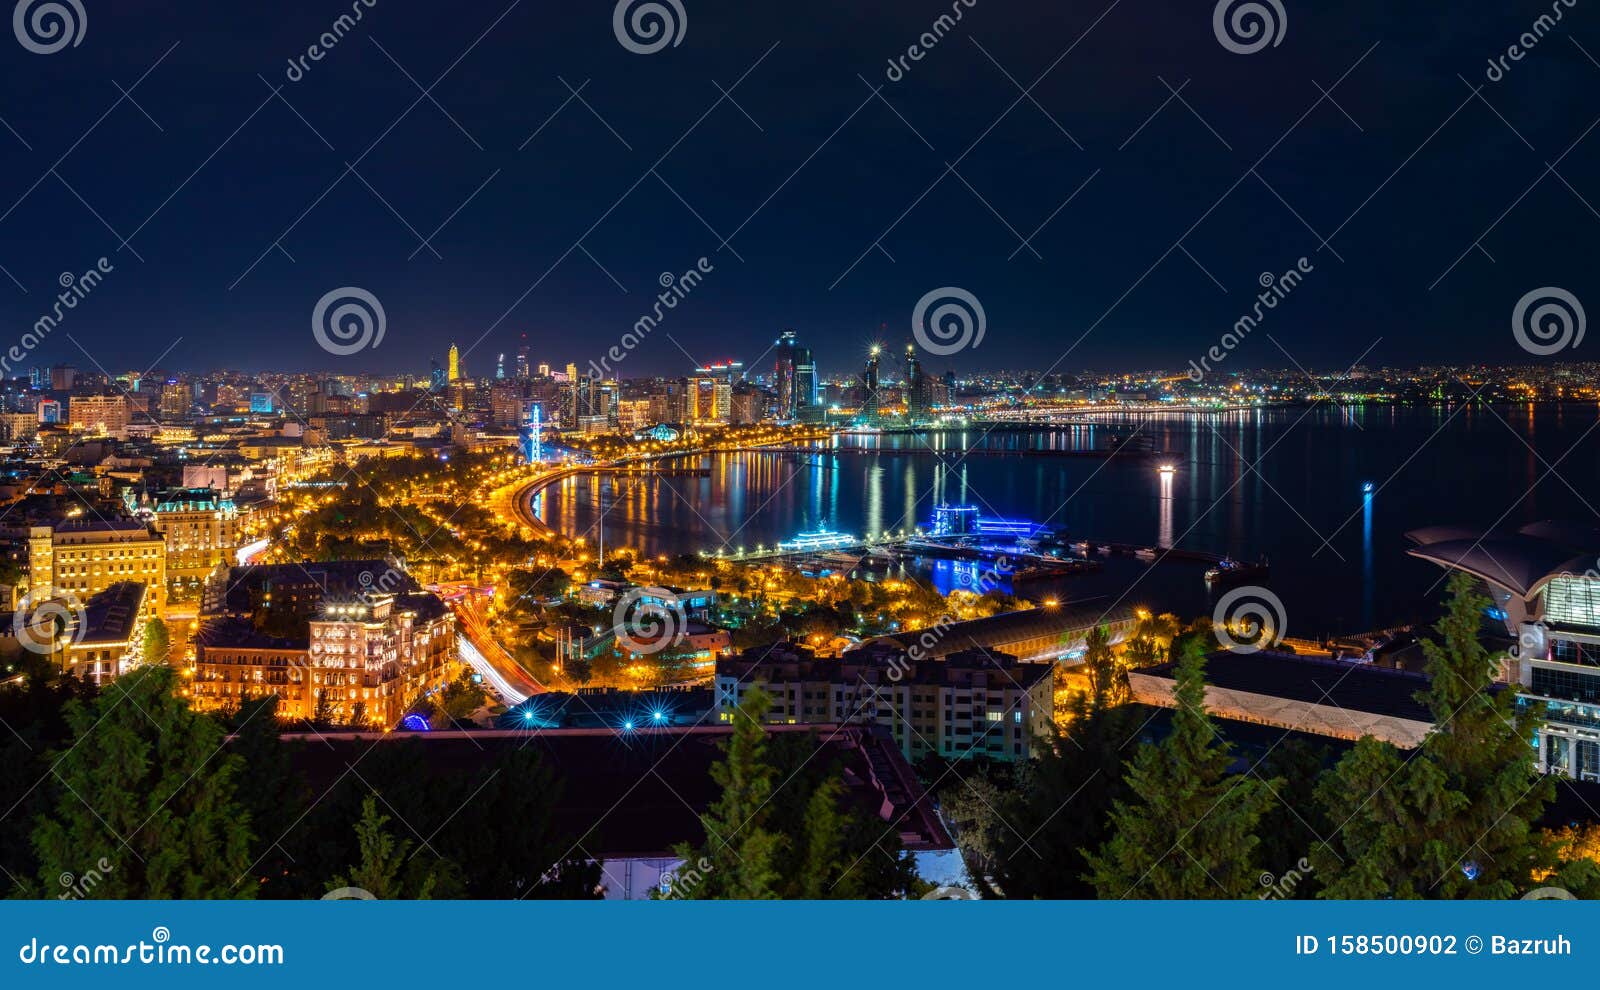 wide panorama of night baku city